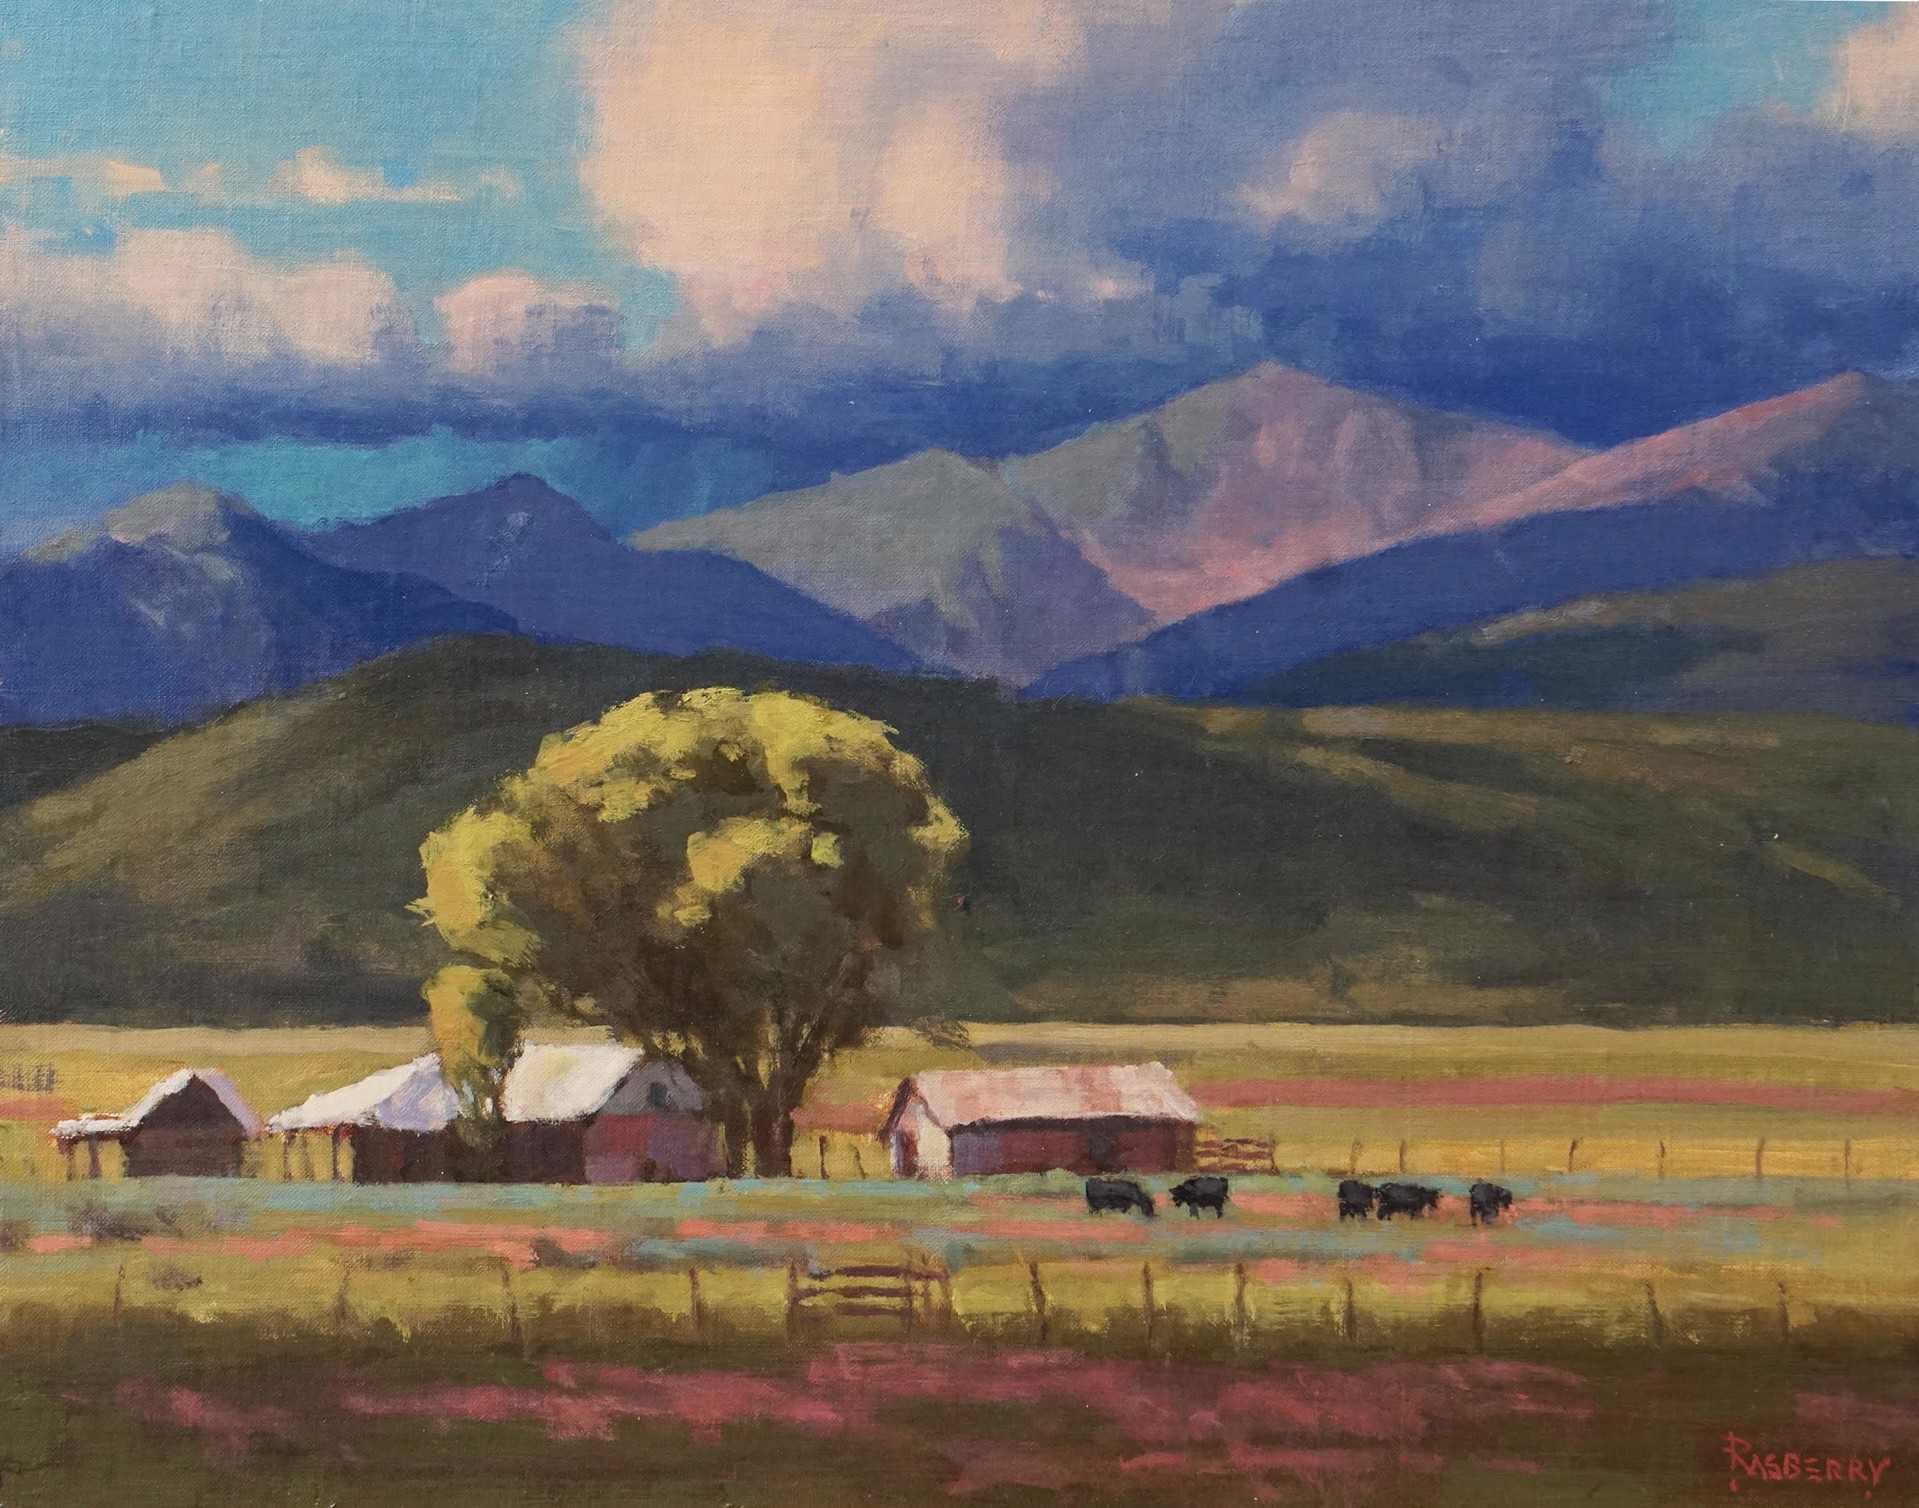 New Mexico Summer Rains by John Rasberry